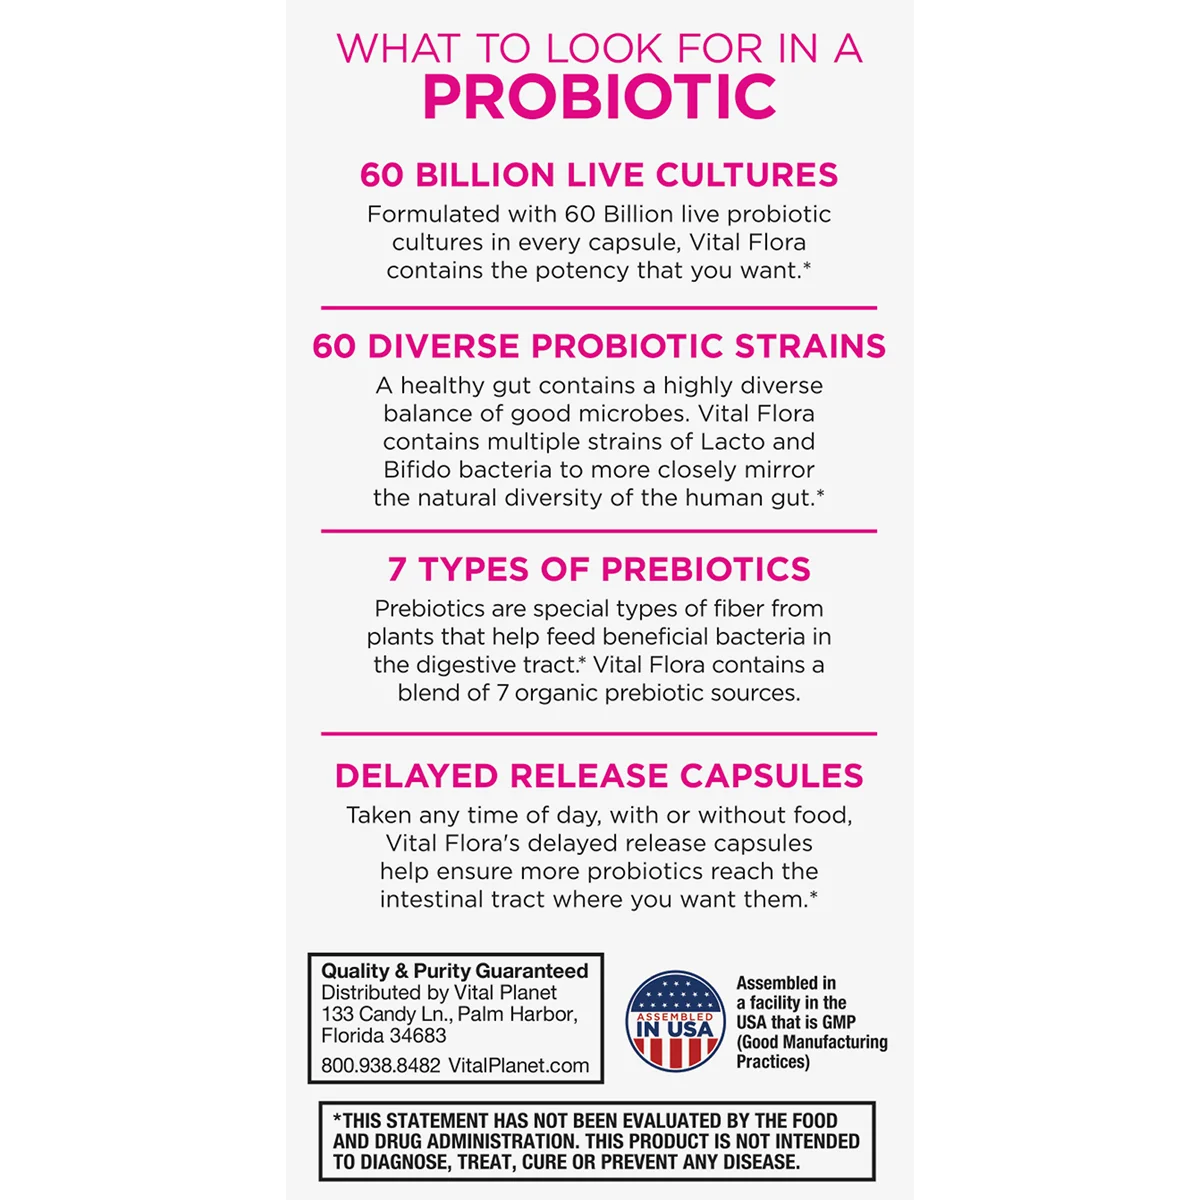 Vital Flora Women’s Daily Probiotic (Shelf Stable)